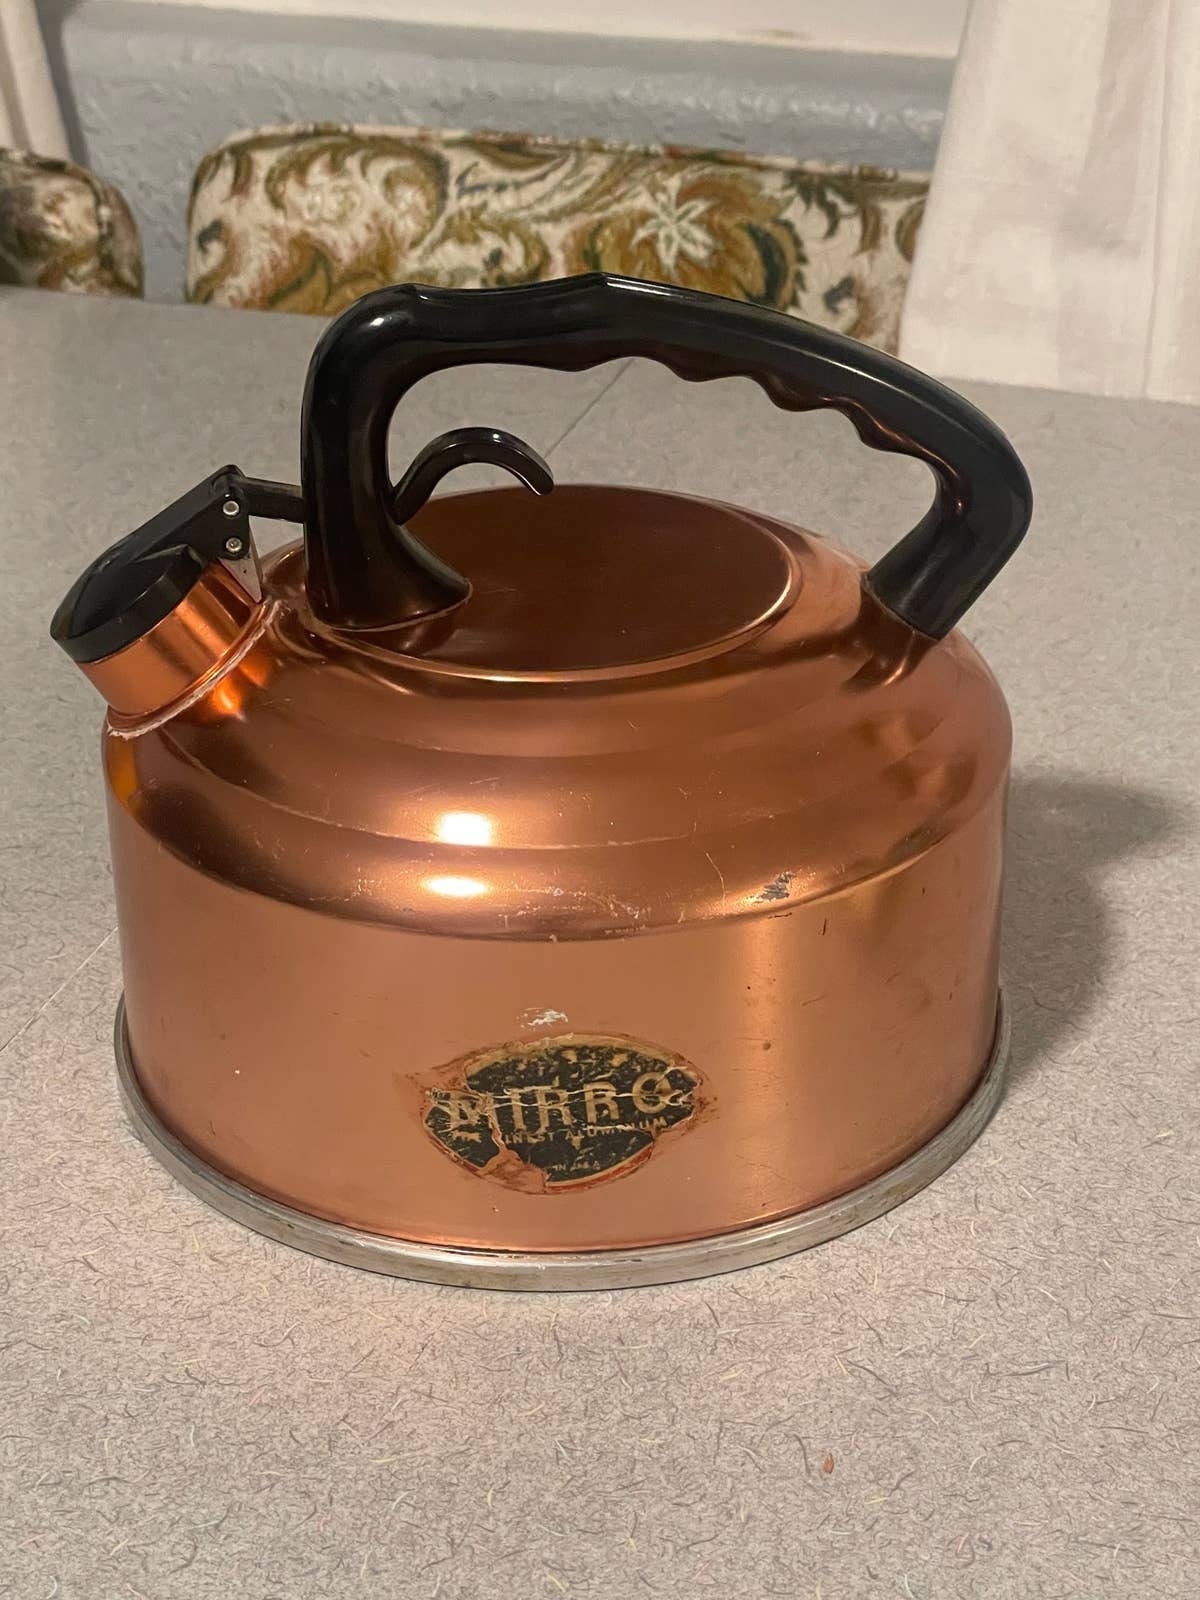 Vintage Comet Aluminum Whistling Tea Kettle Teapot Made in USA Works